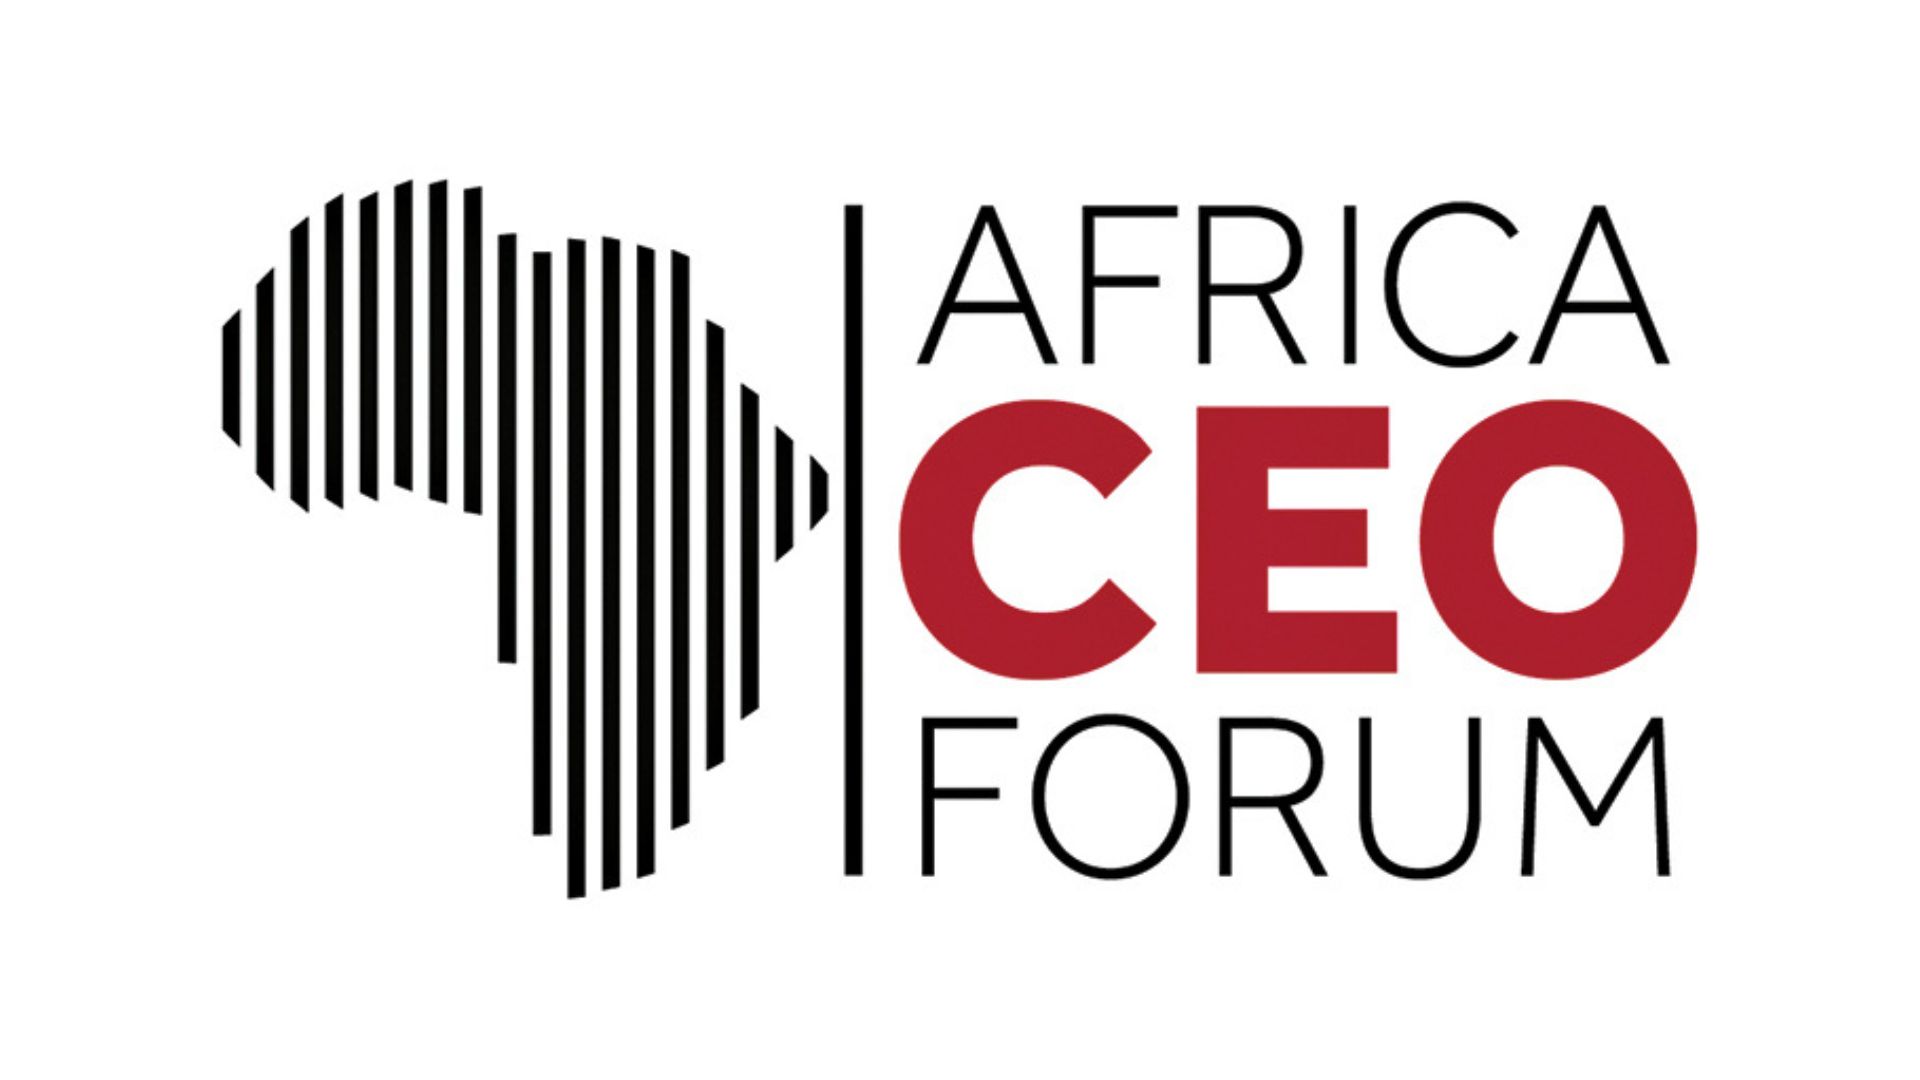 AFRICA CEO FORUM Fanaka.co